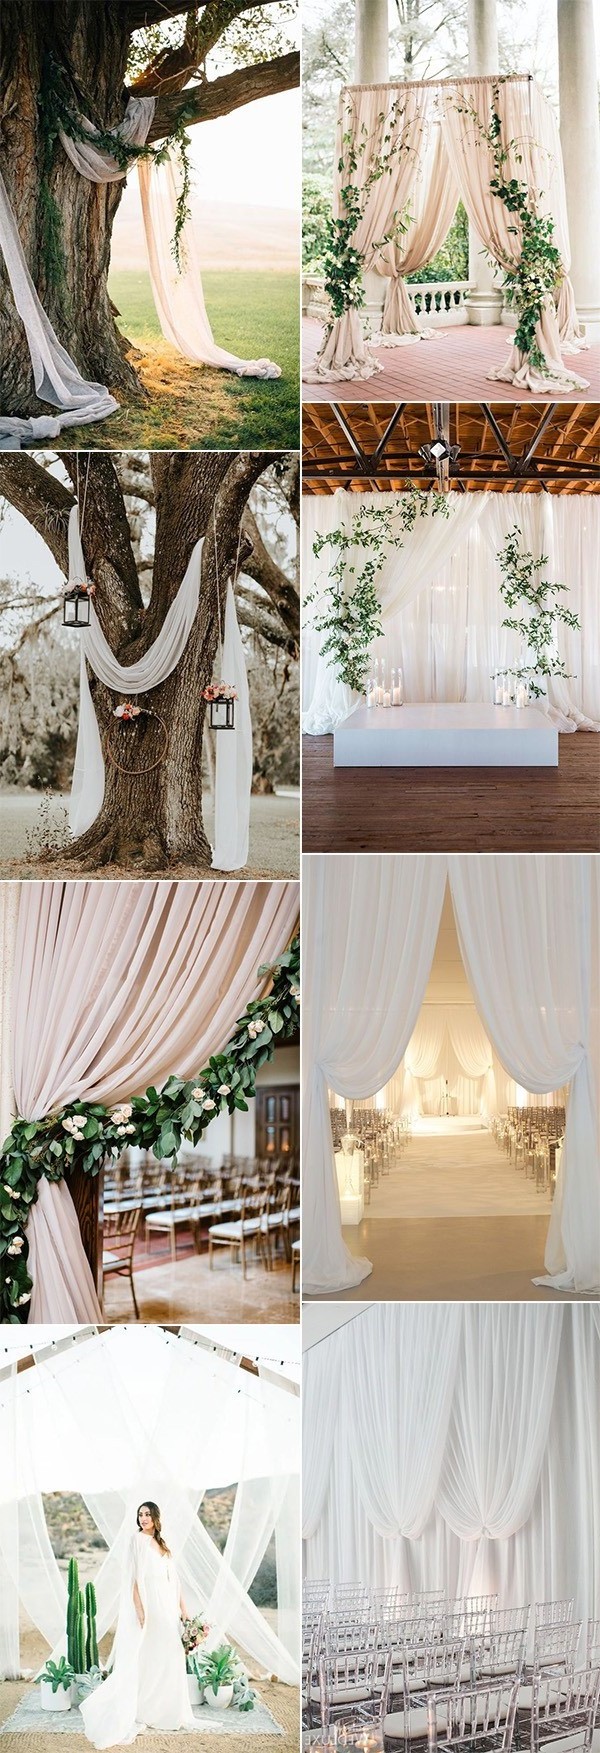 trending wedding ceremony decoration ideas with draped fabric